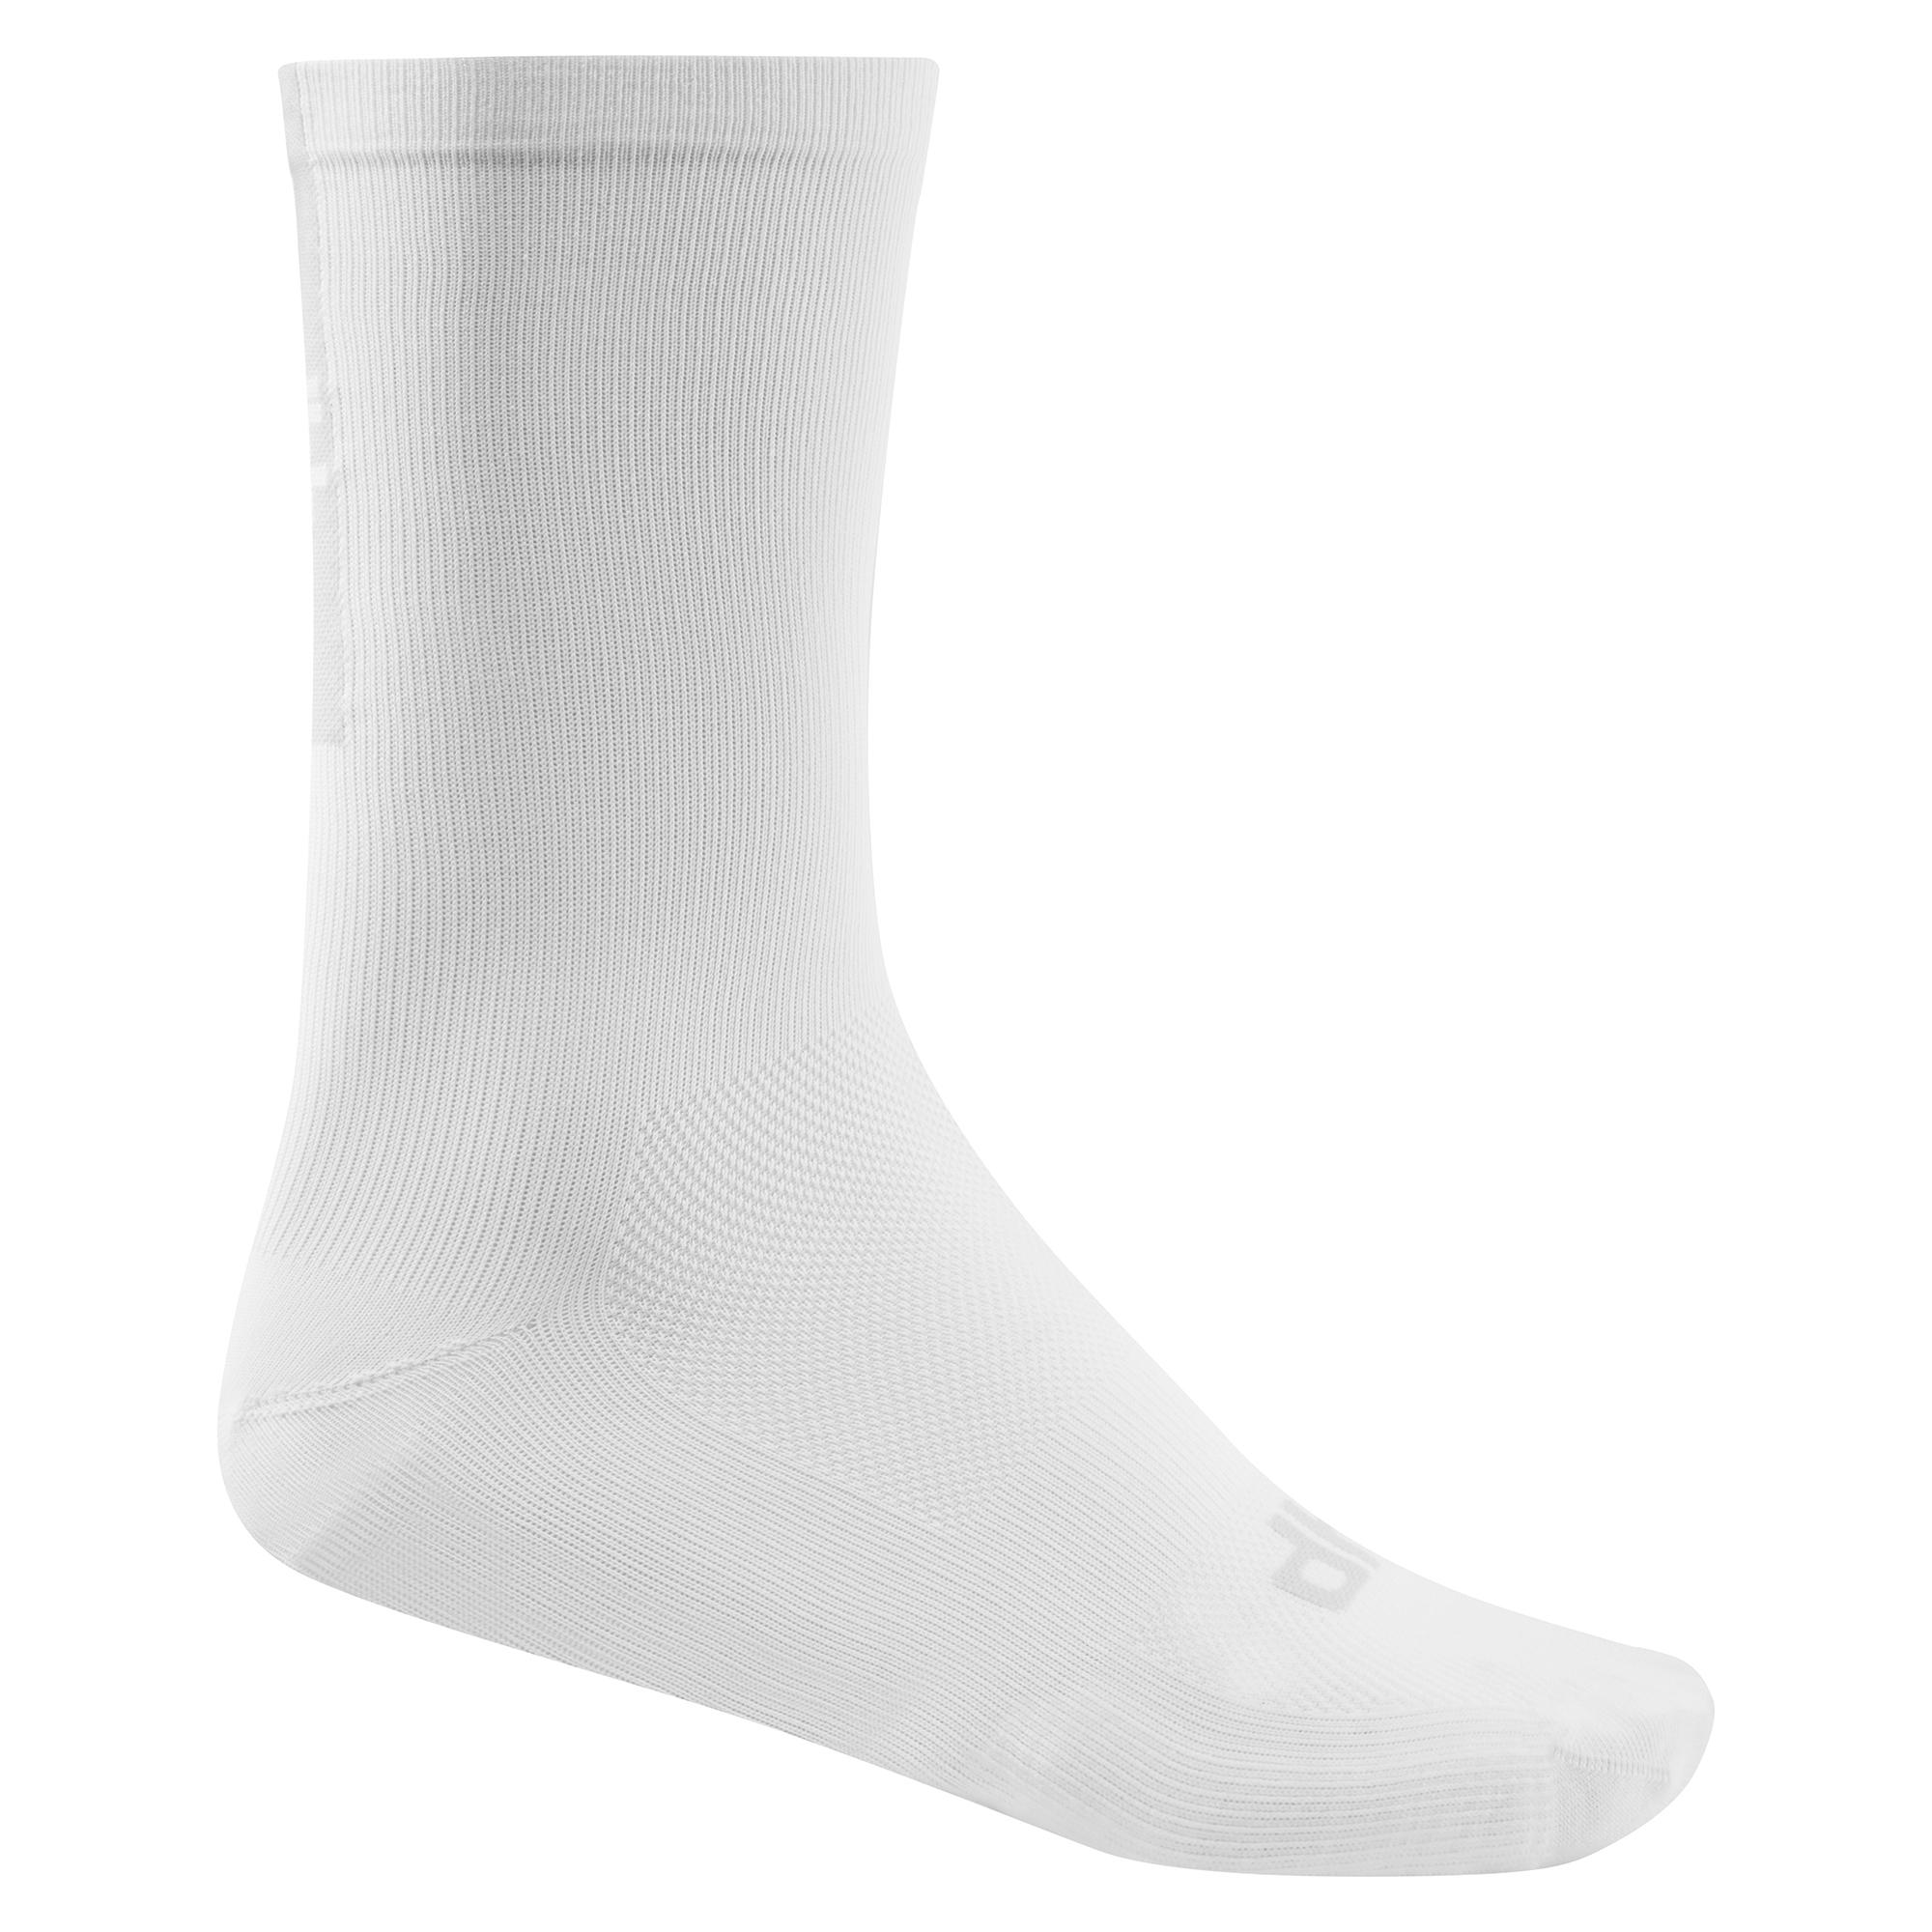 Dhb Aeron Tall Sock - White/grey